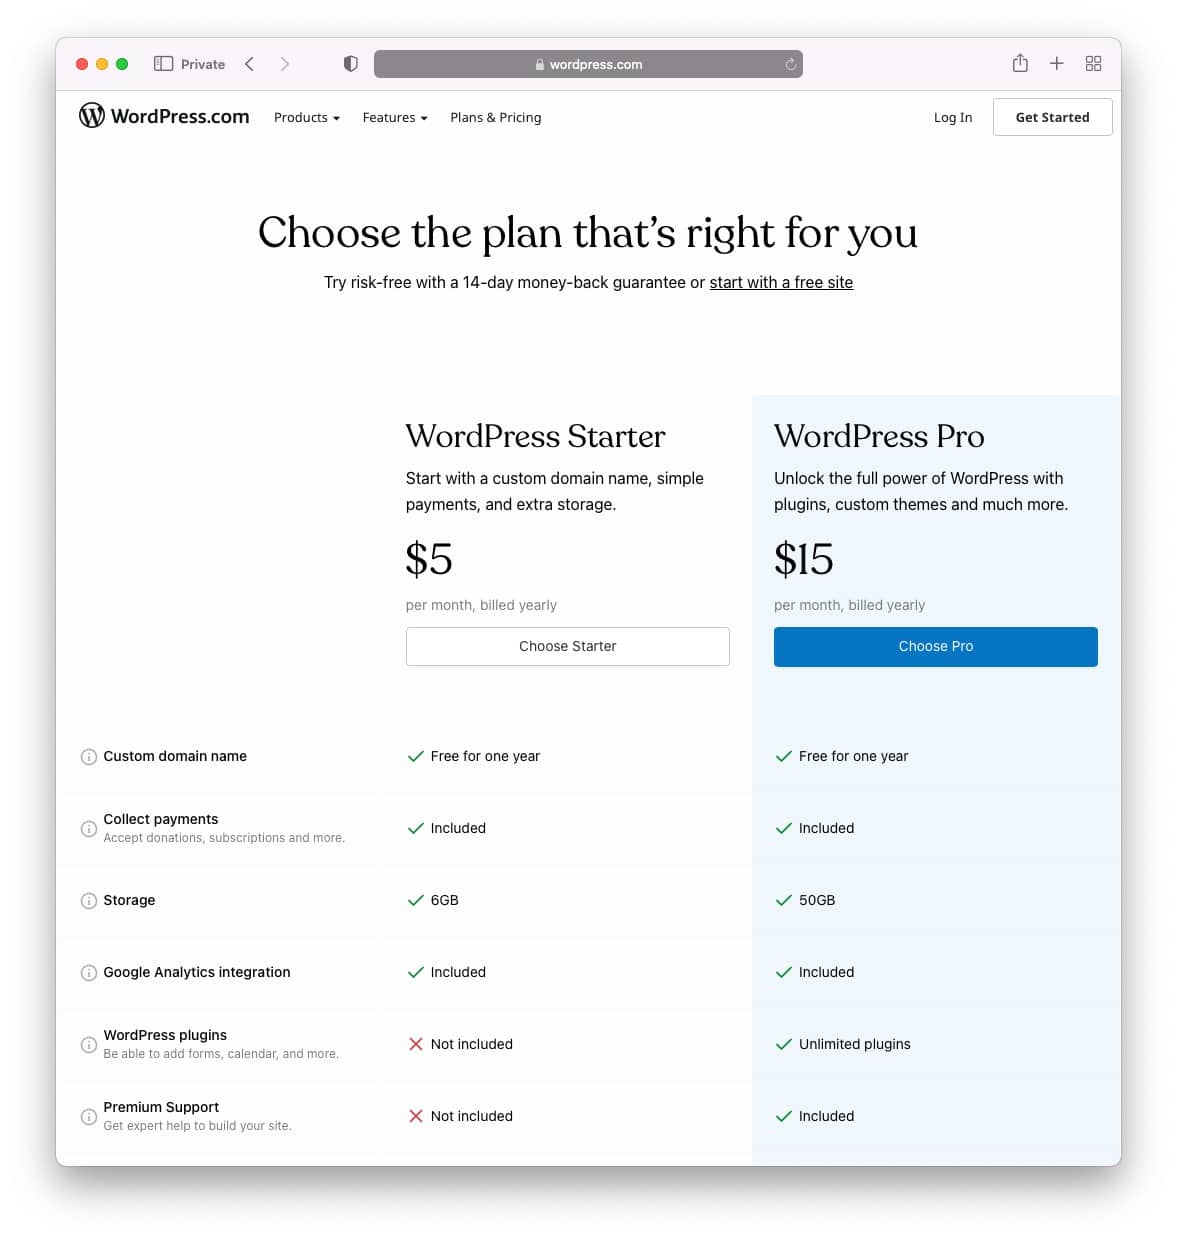 WordPress.com pricing changes again